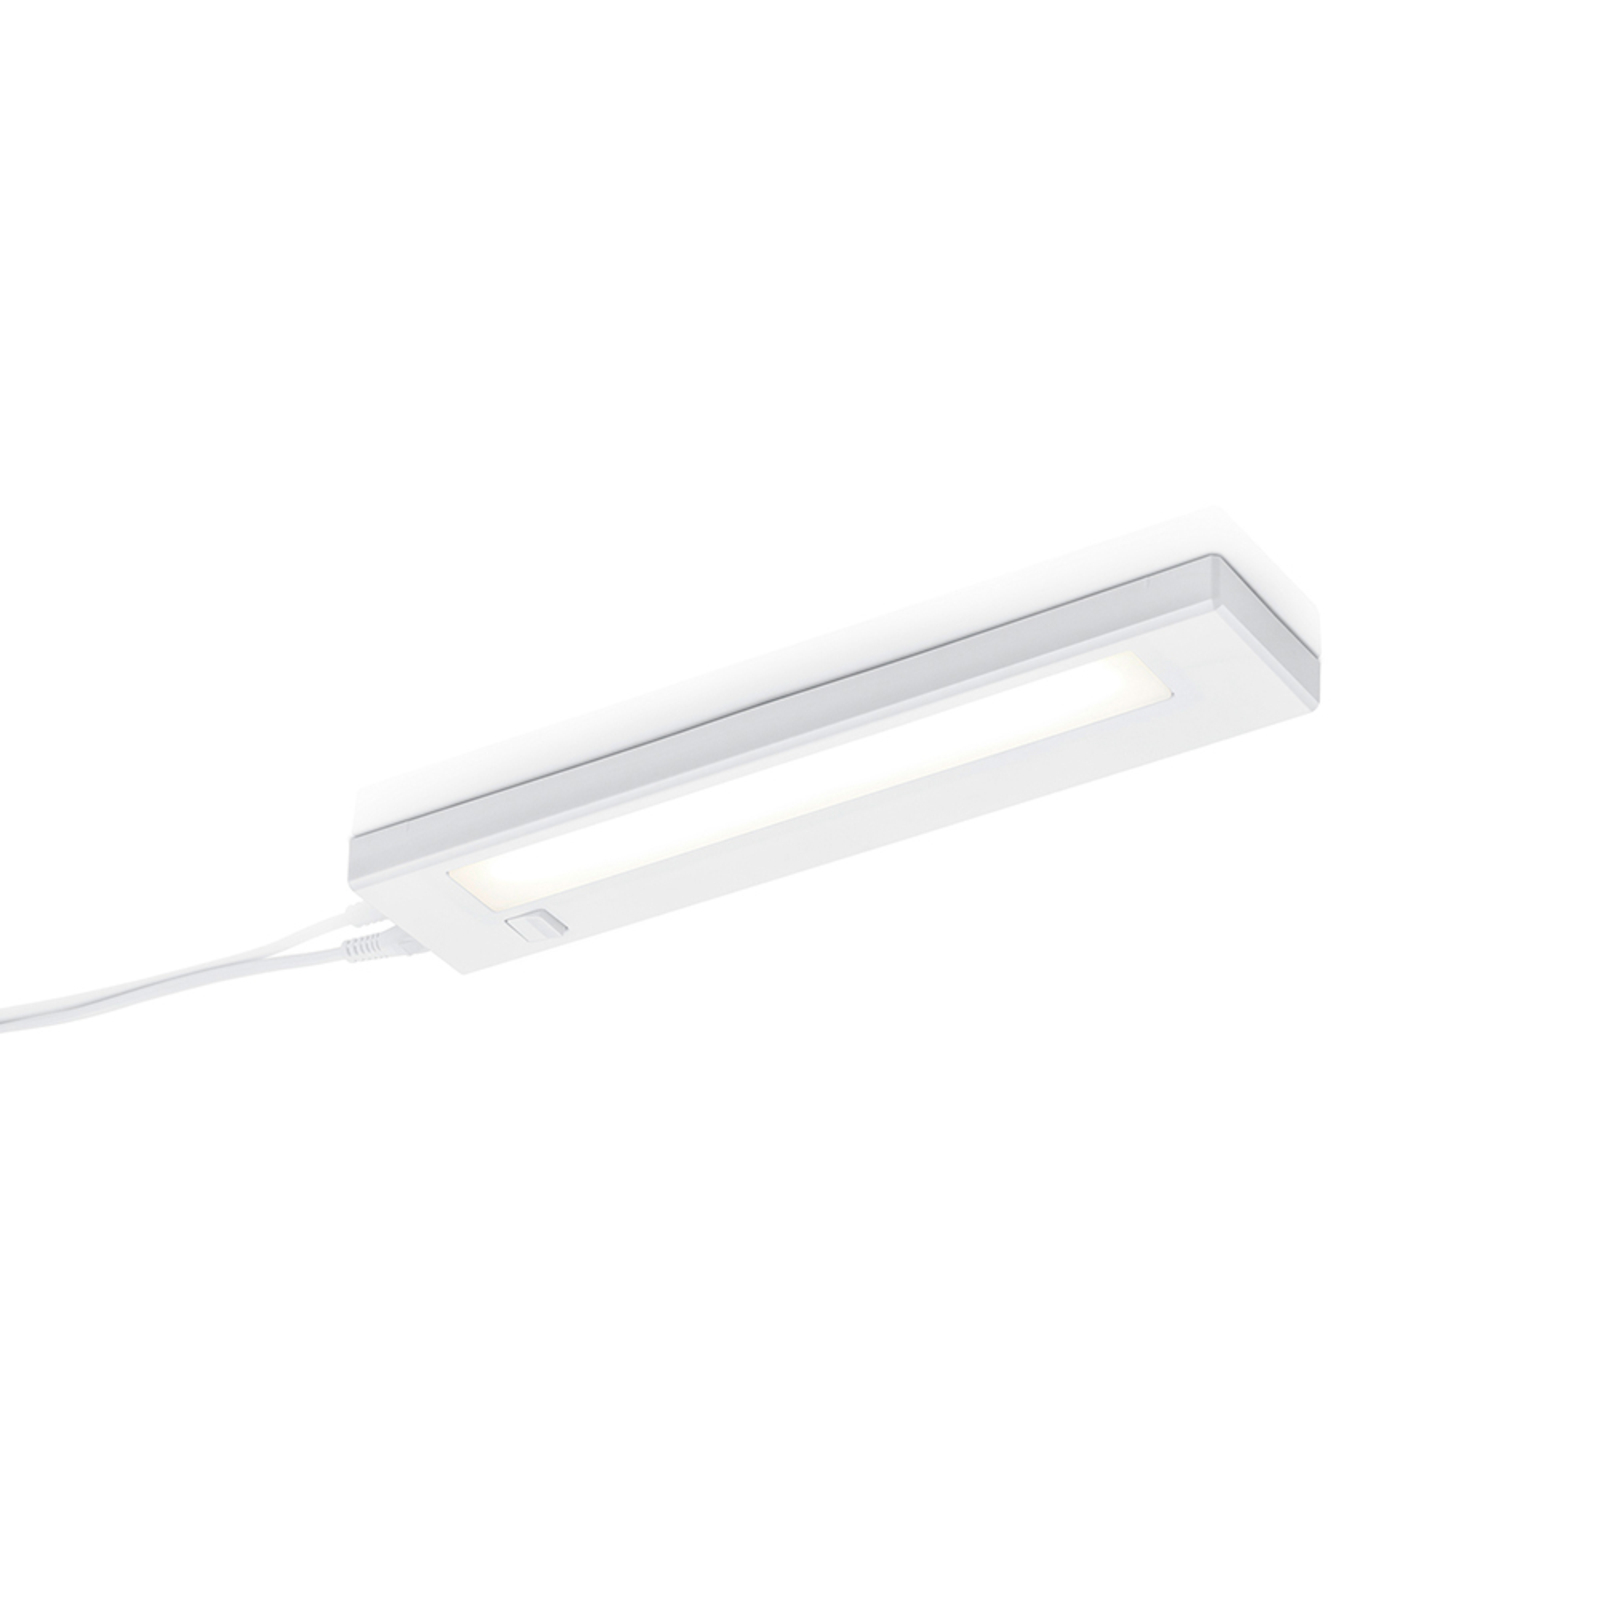 LED pult alatti lámpa Alino, fehér, hossza 34 cm